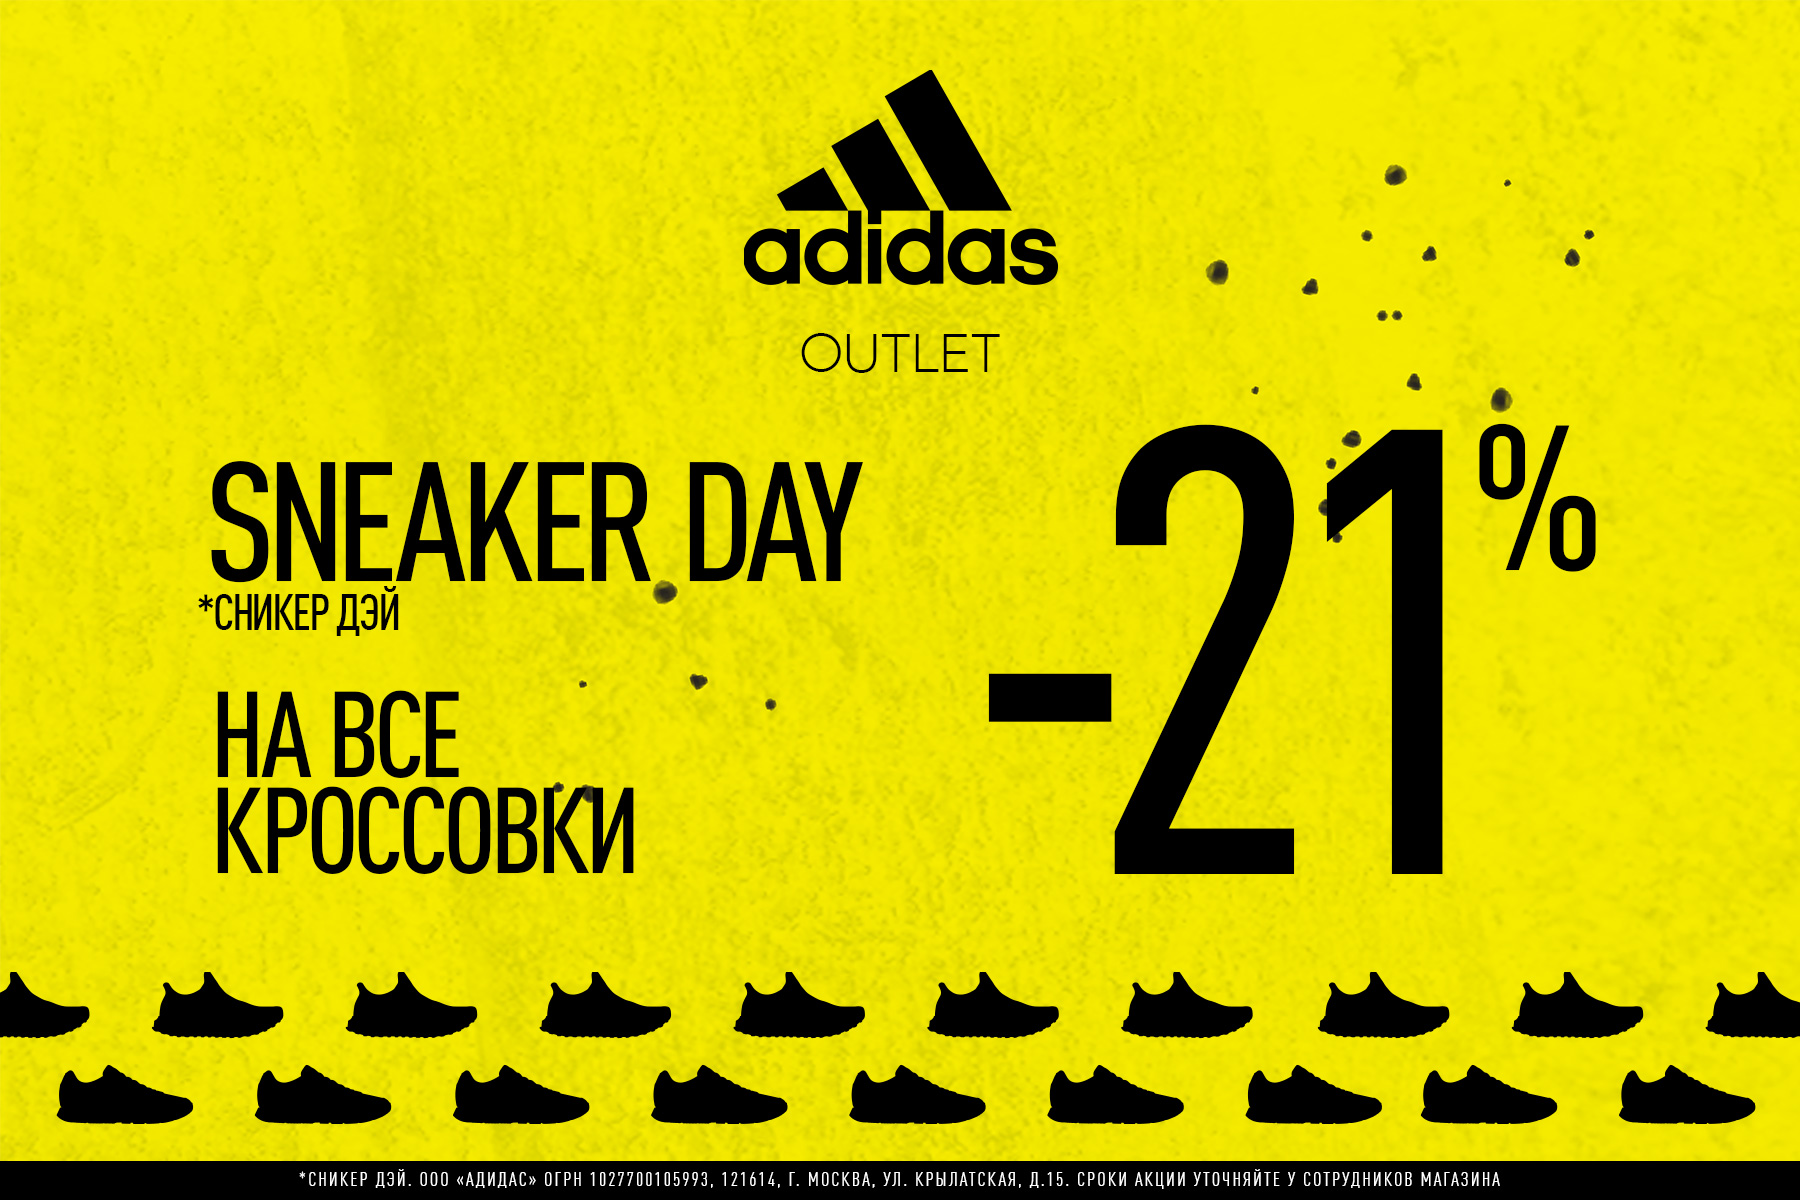 Sneaker Day в Дисконт-центрах adidas и Reebok! Скидка 21% на все кроссовки с 17 по 27 сентября.